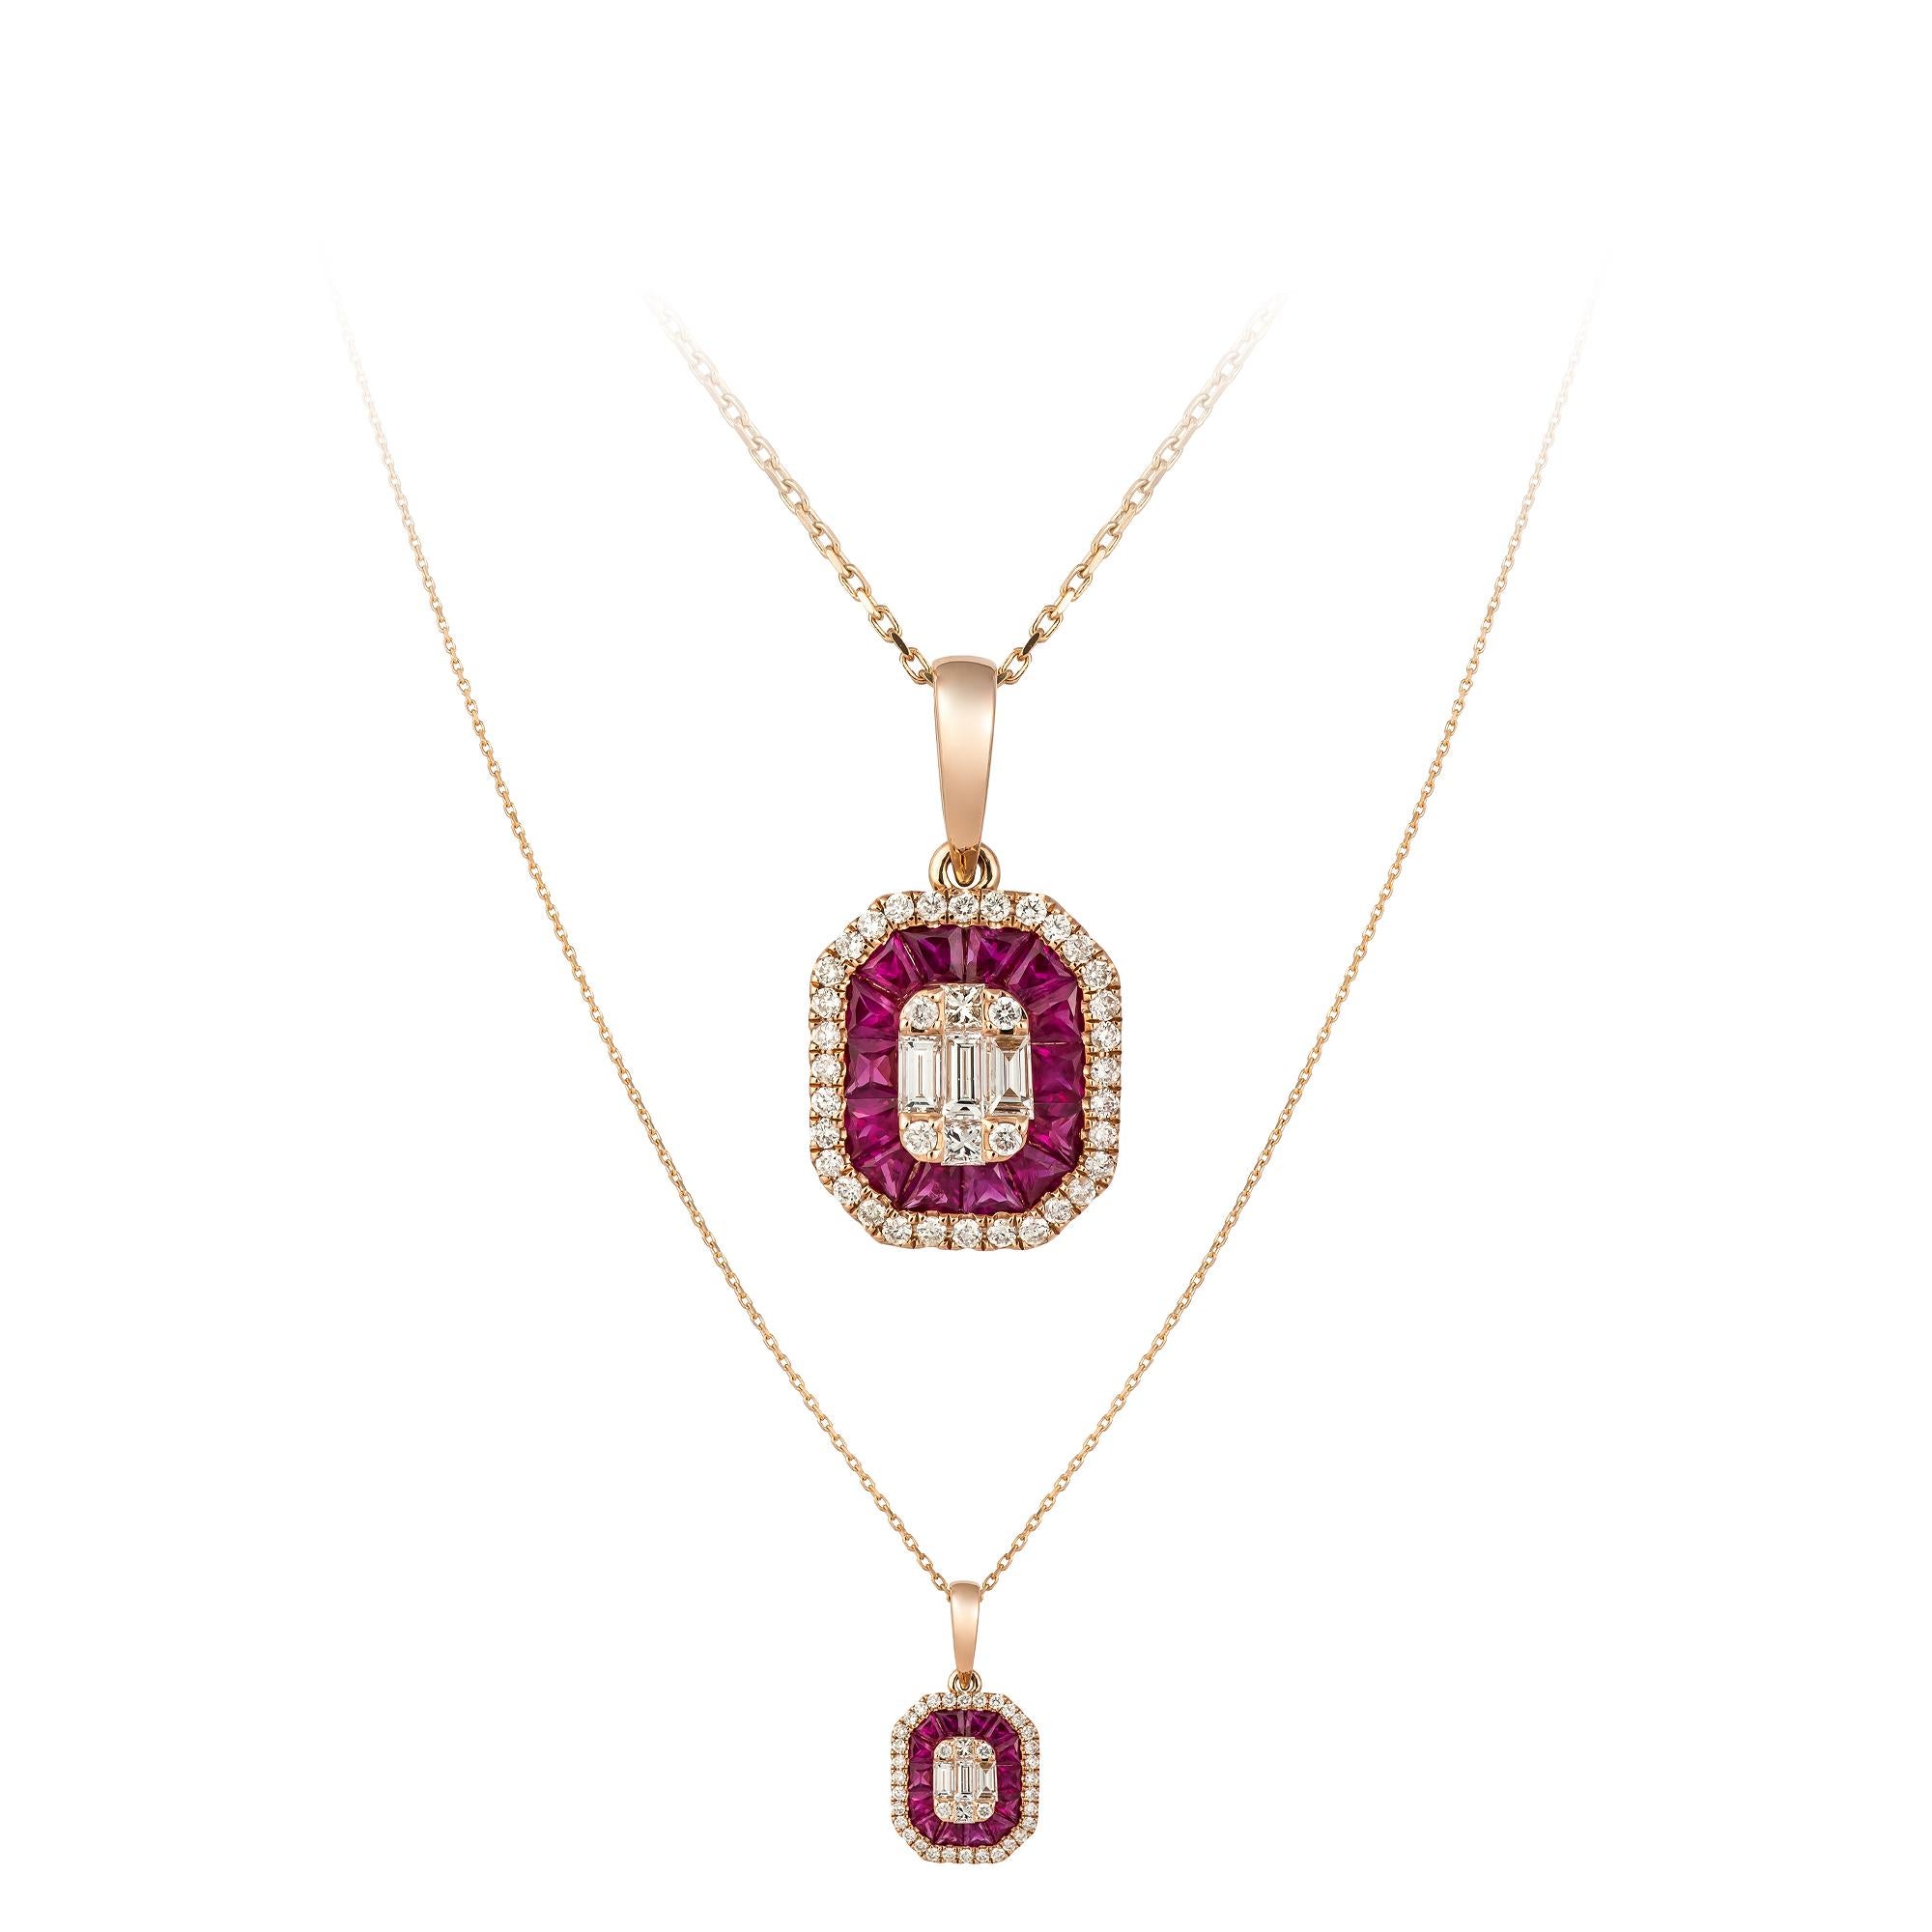 NECKLACE 18K Rose Gold
Diamond 0.22 Cts/36 Pcs DiamondPR 0.05 Cts/2 Pcs
Ruby 1.00 Cts/20 Pcs
TB 0.18 Cts/3 Pcs

With a heritage of ancient fine Swiss jewelry traditions, NATKINA is a Geneva based jewellery brand, which creates modern jewellery